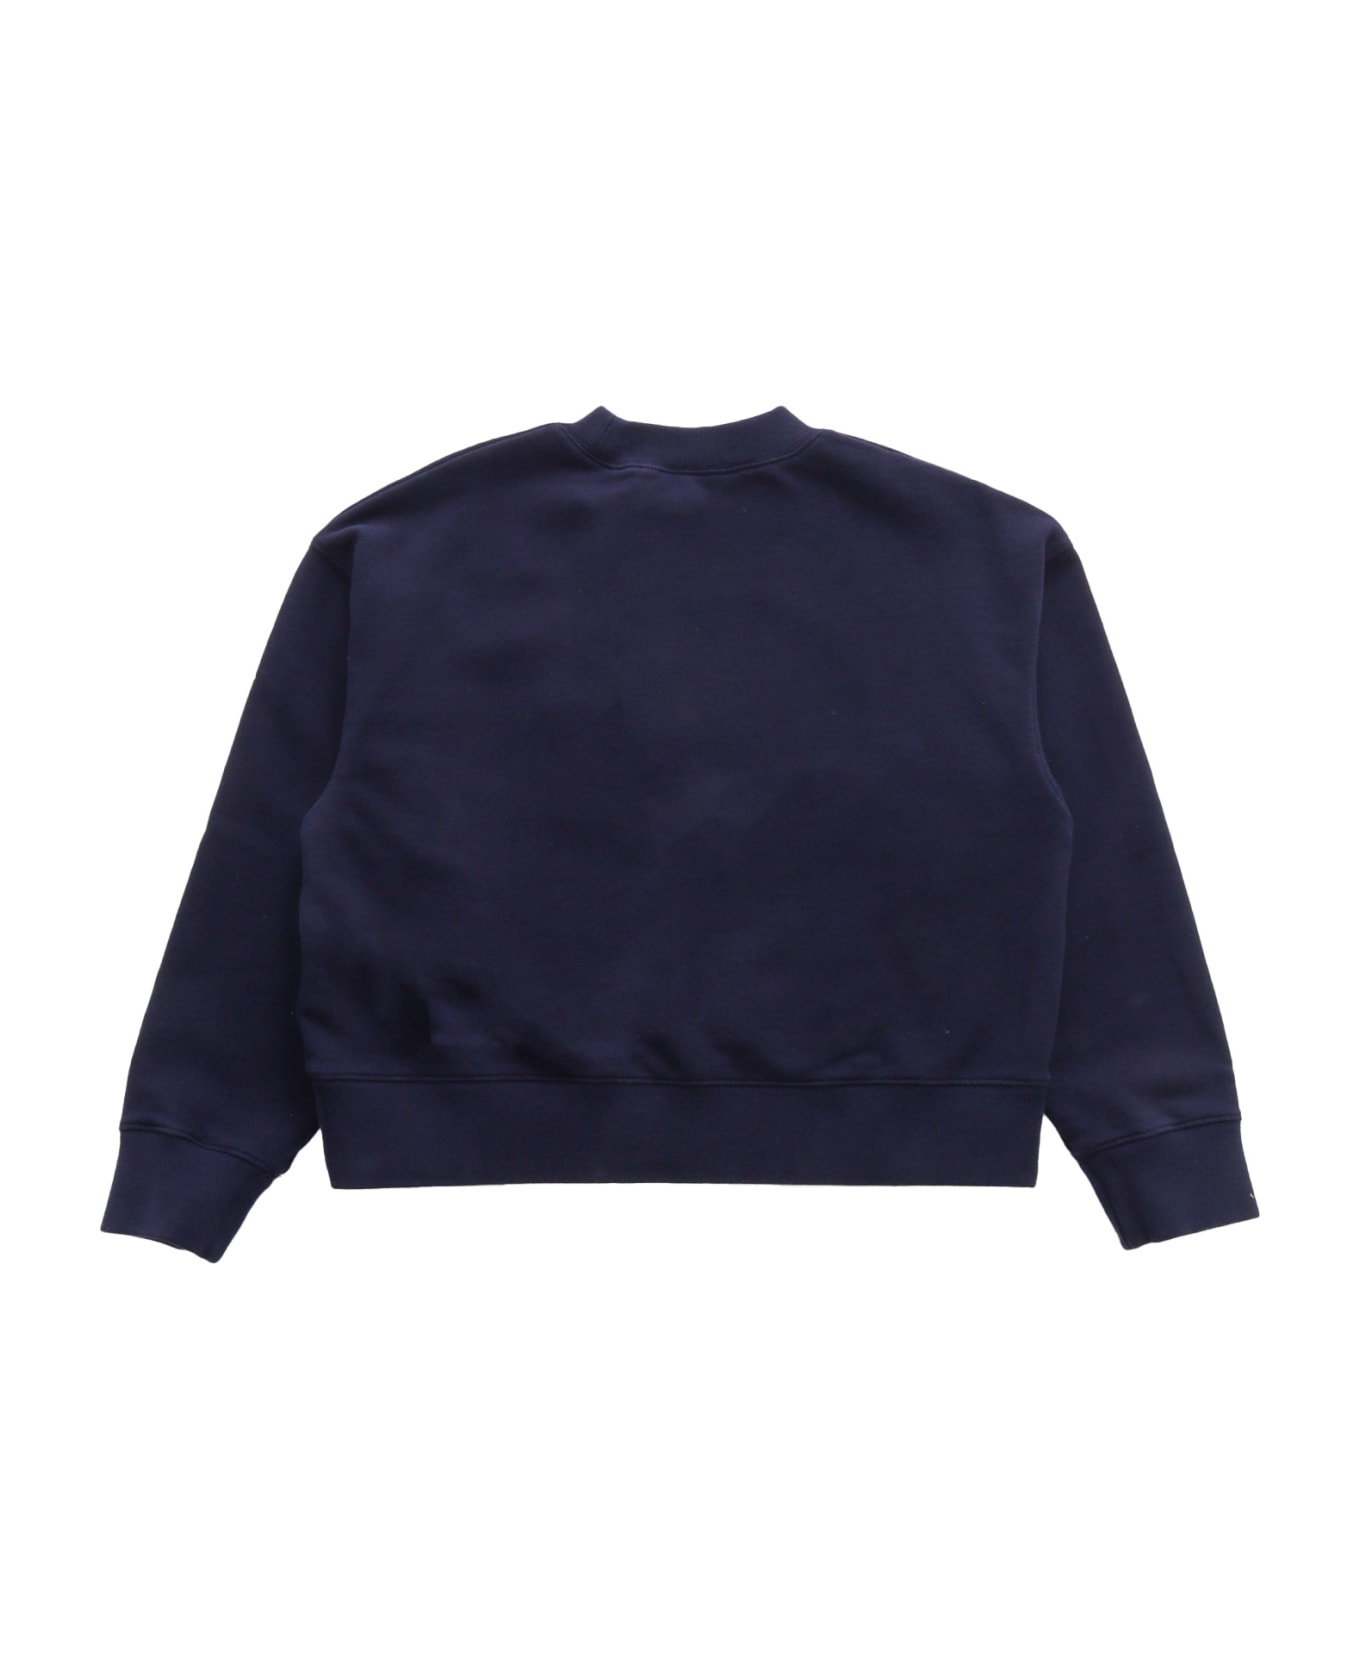 Palm Angels Bear Sweatshirt - BLUE ニットウェア＆スウェットシャツ